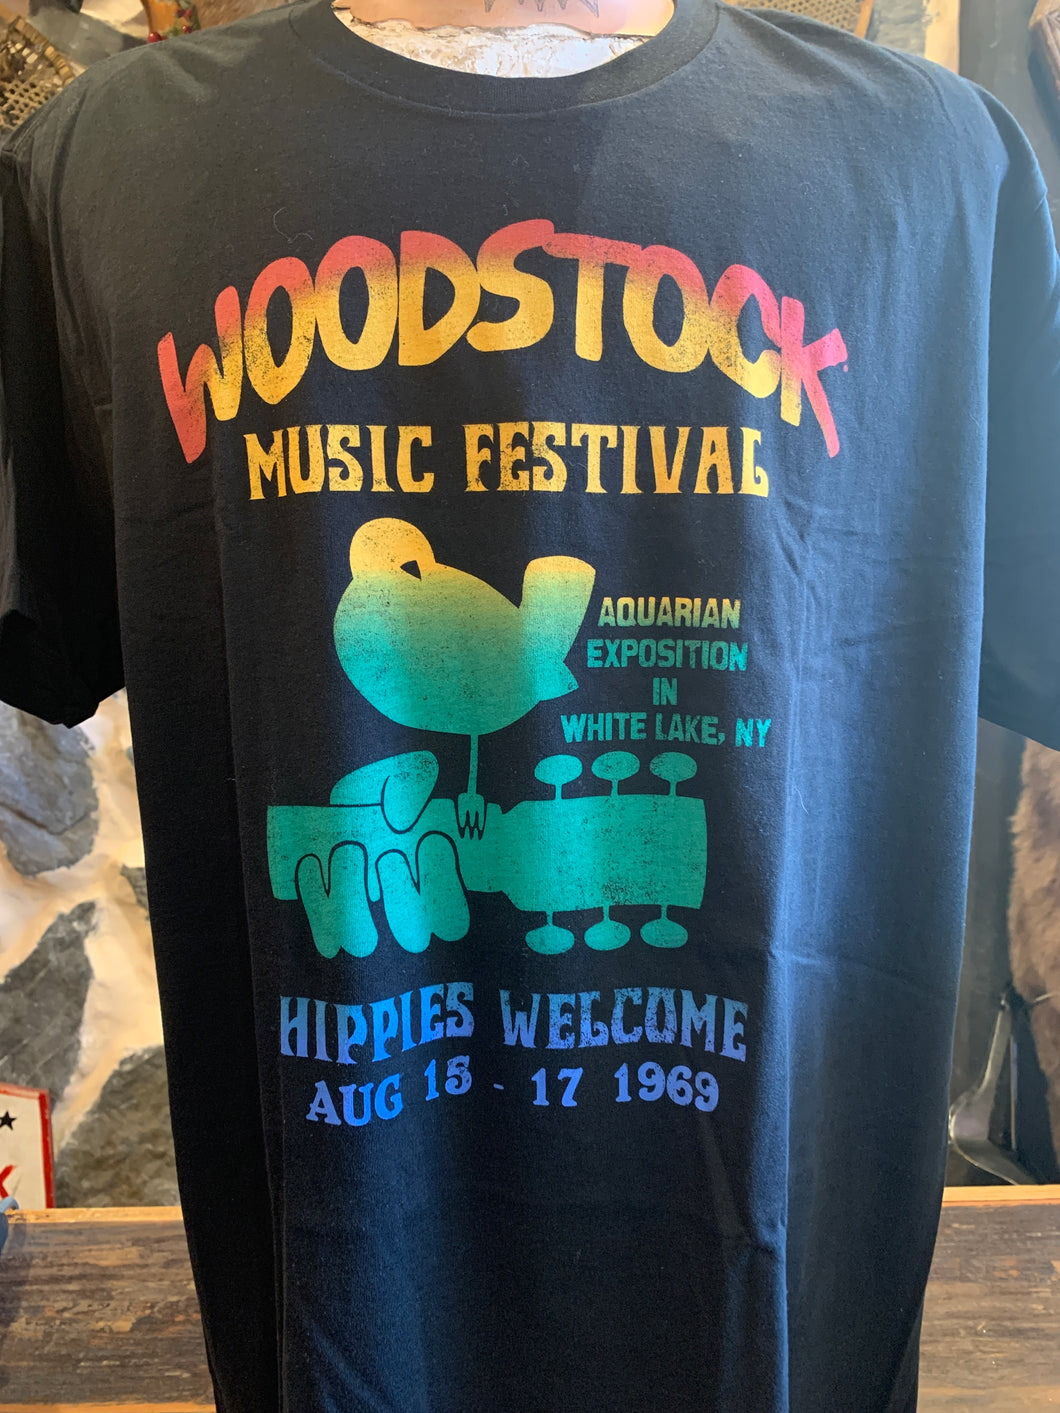 Woodstock Festival. Soft Vintage Feel Tee